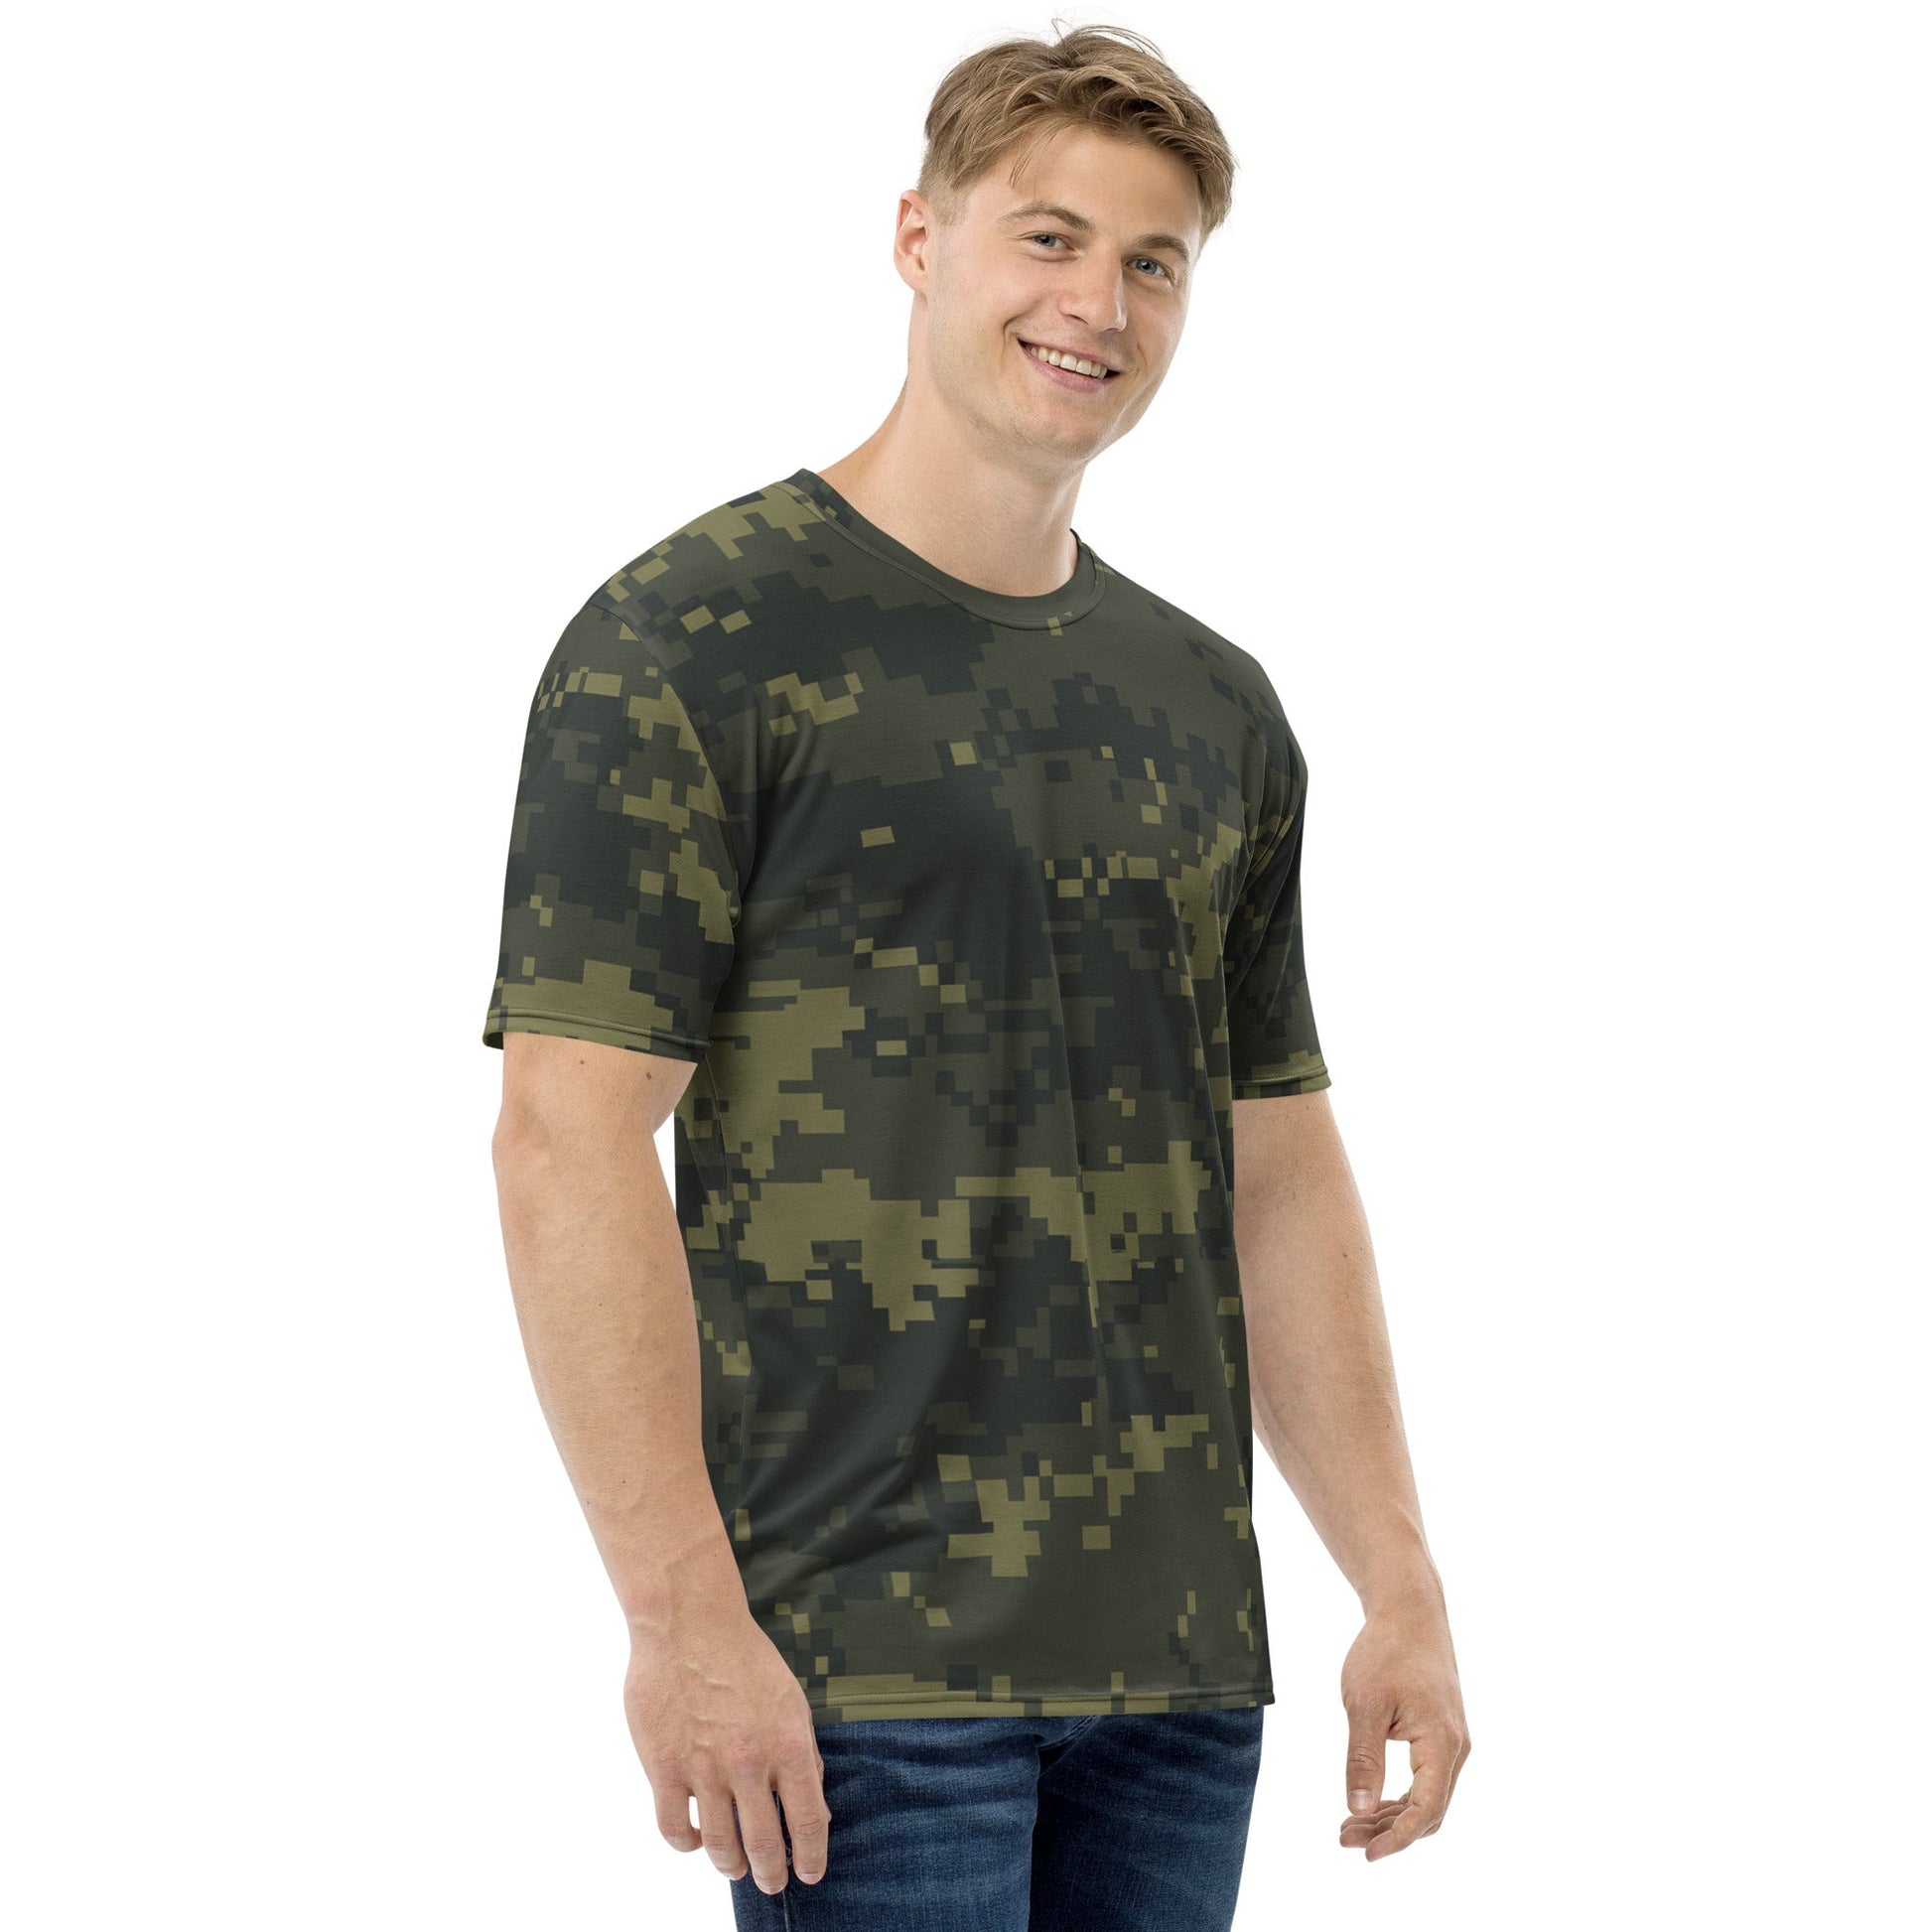 Digital Camo Men's T-shirt Army camouflage Shirt